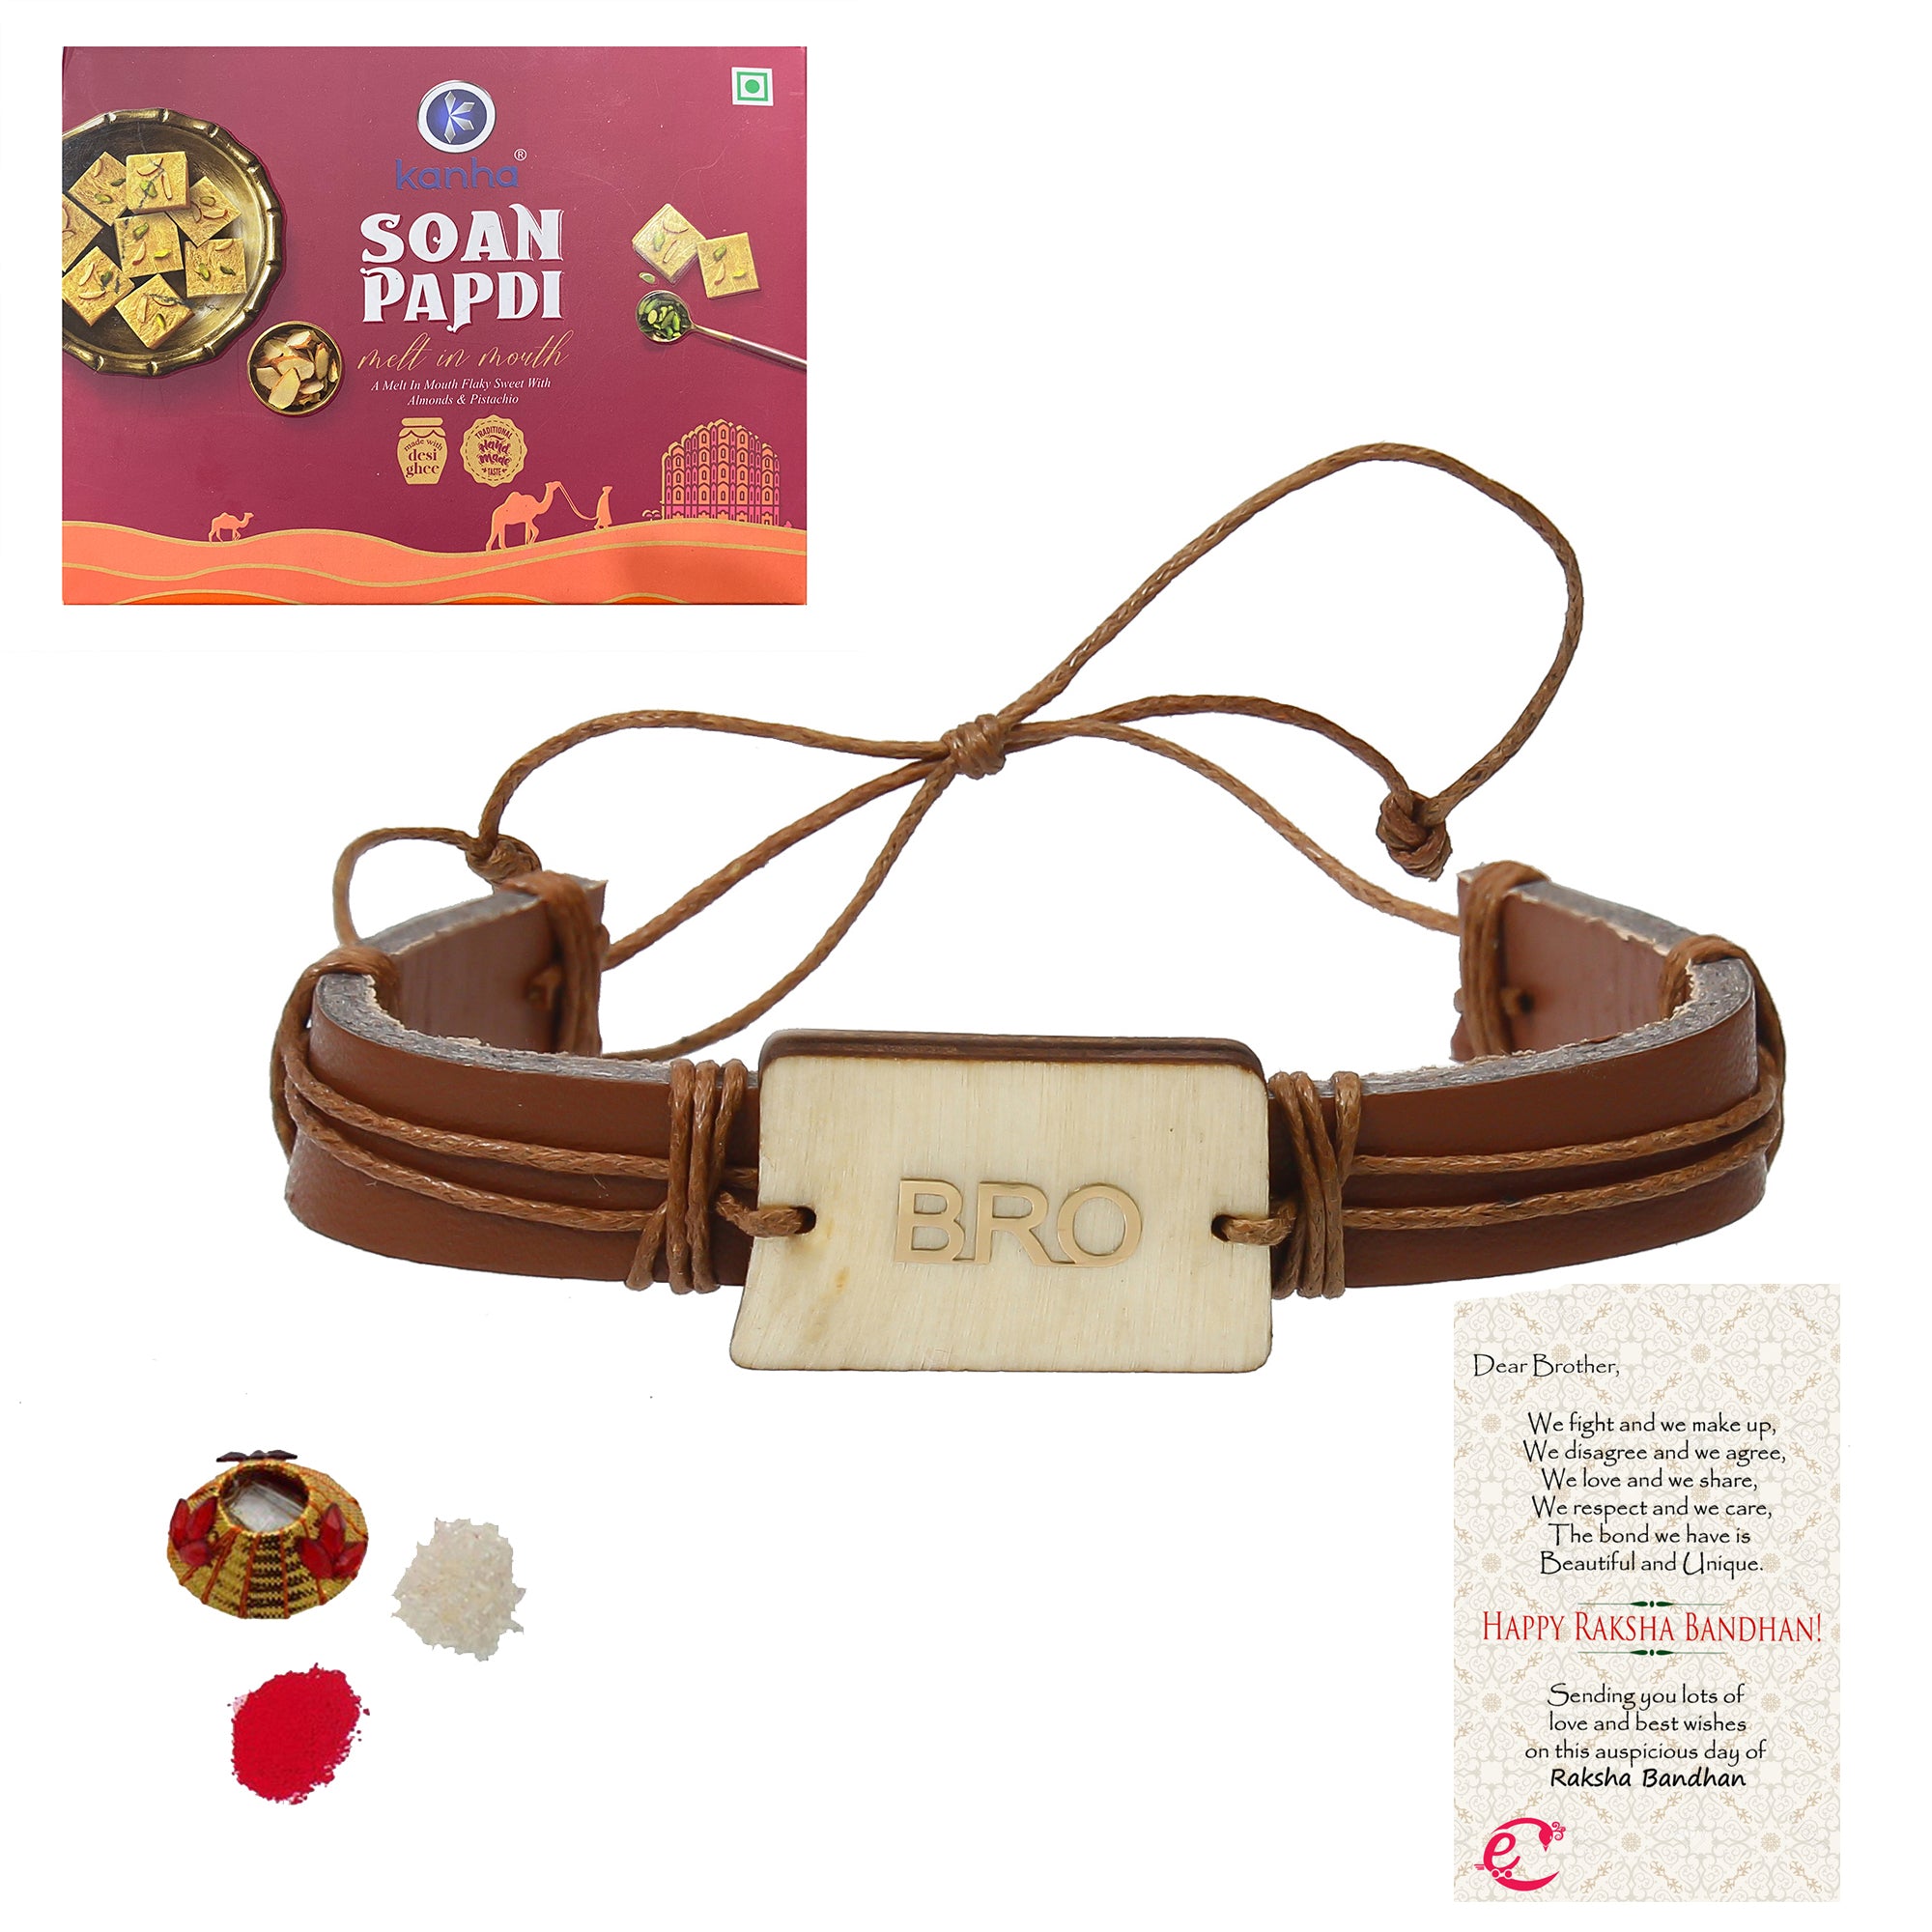 Designer Leather Bracelet BRO Rakhi with Soan Papdi (500 Gm) and Roli Tikka Matki, Best Wishes Greeting Card